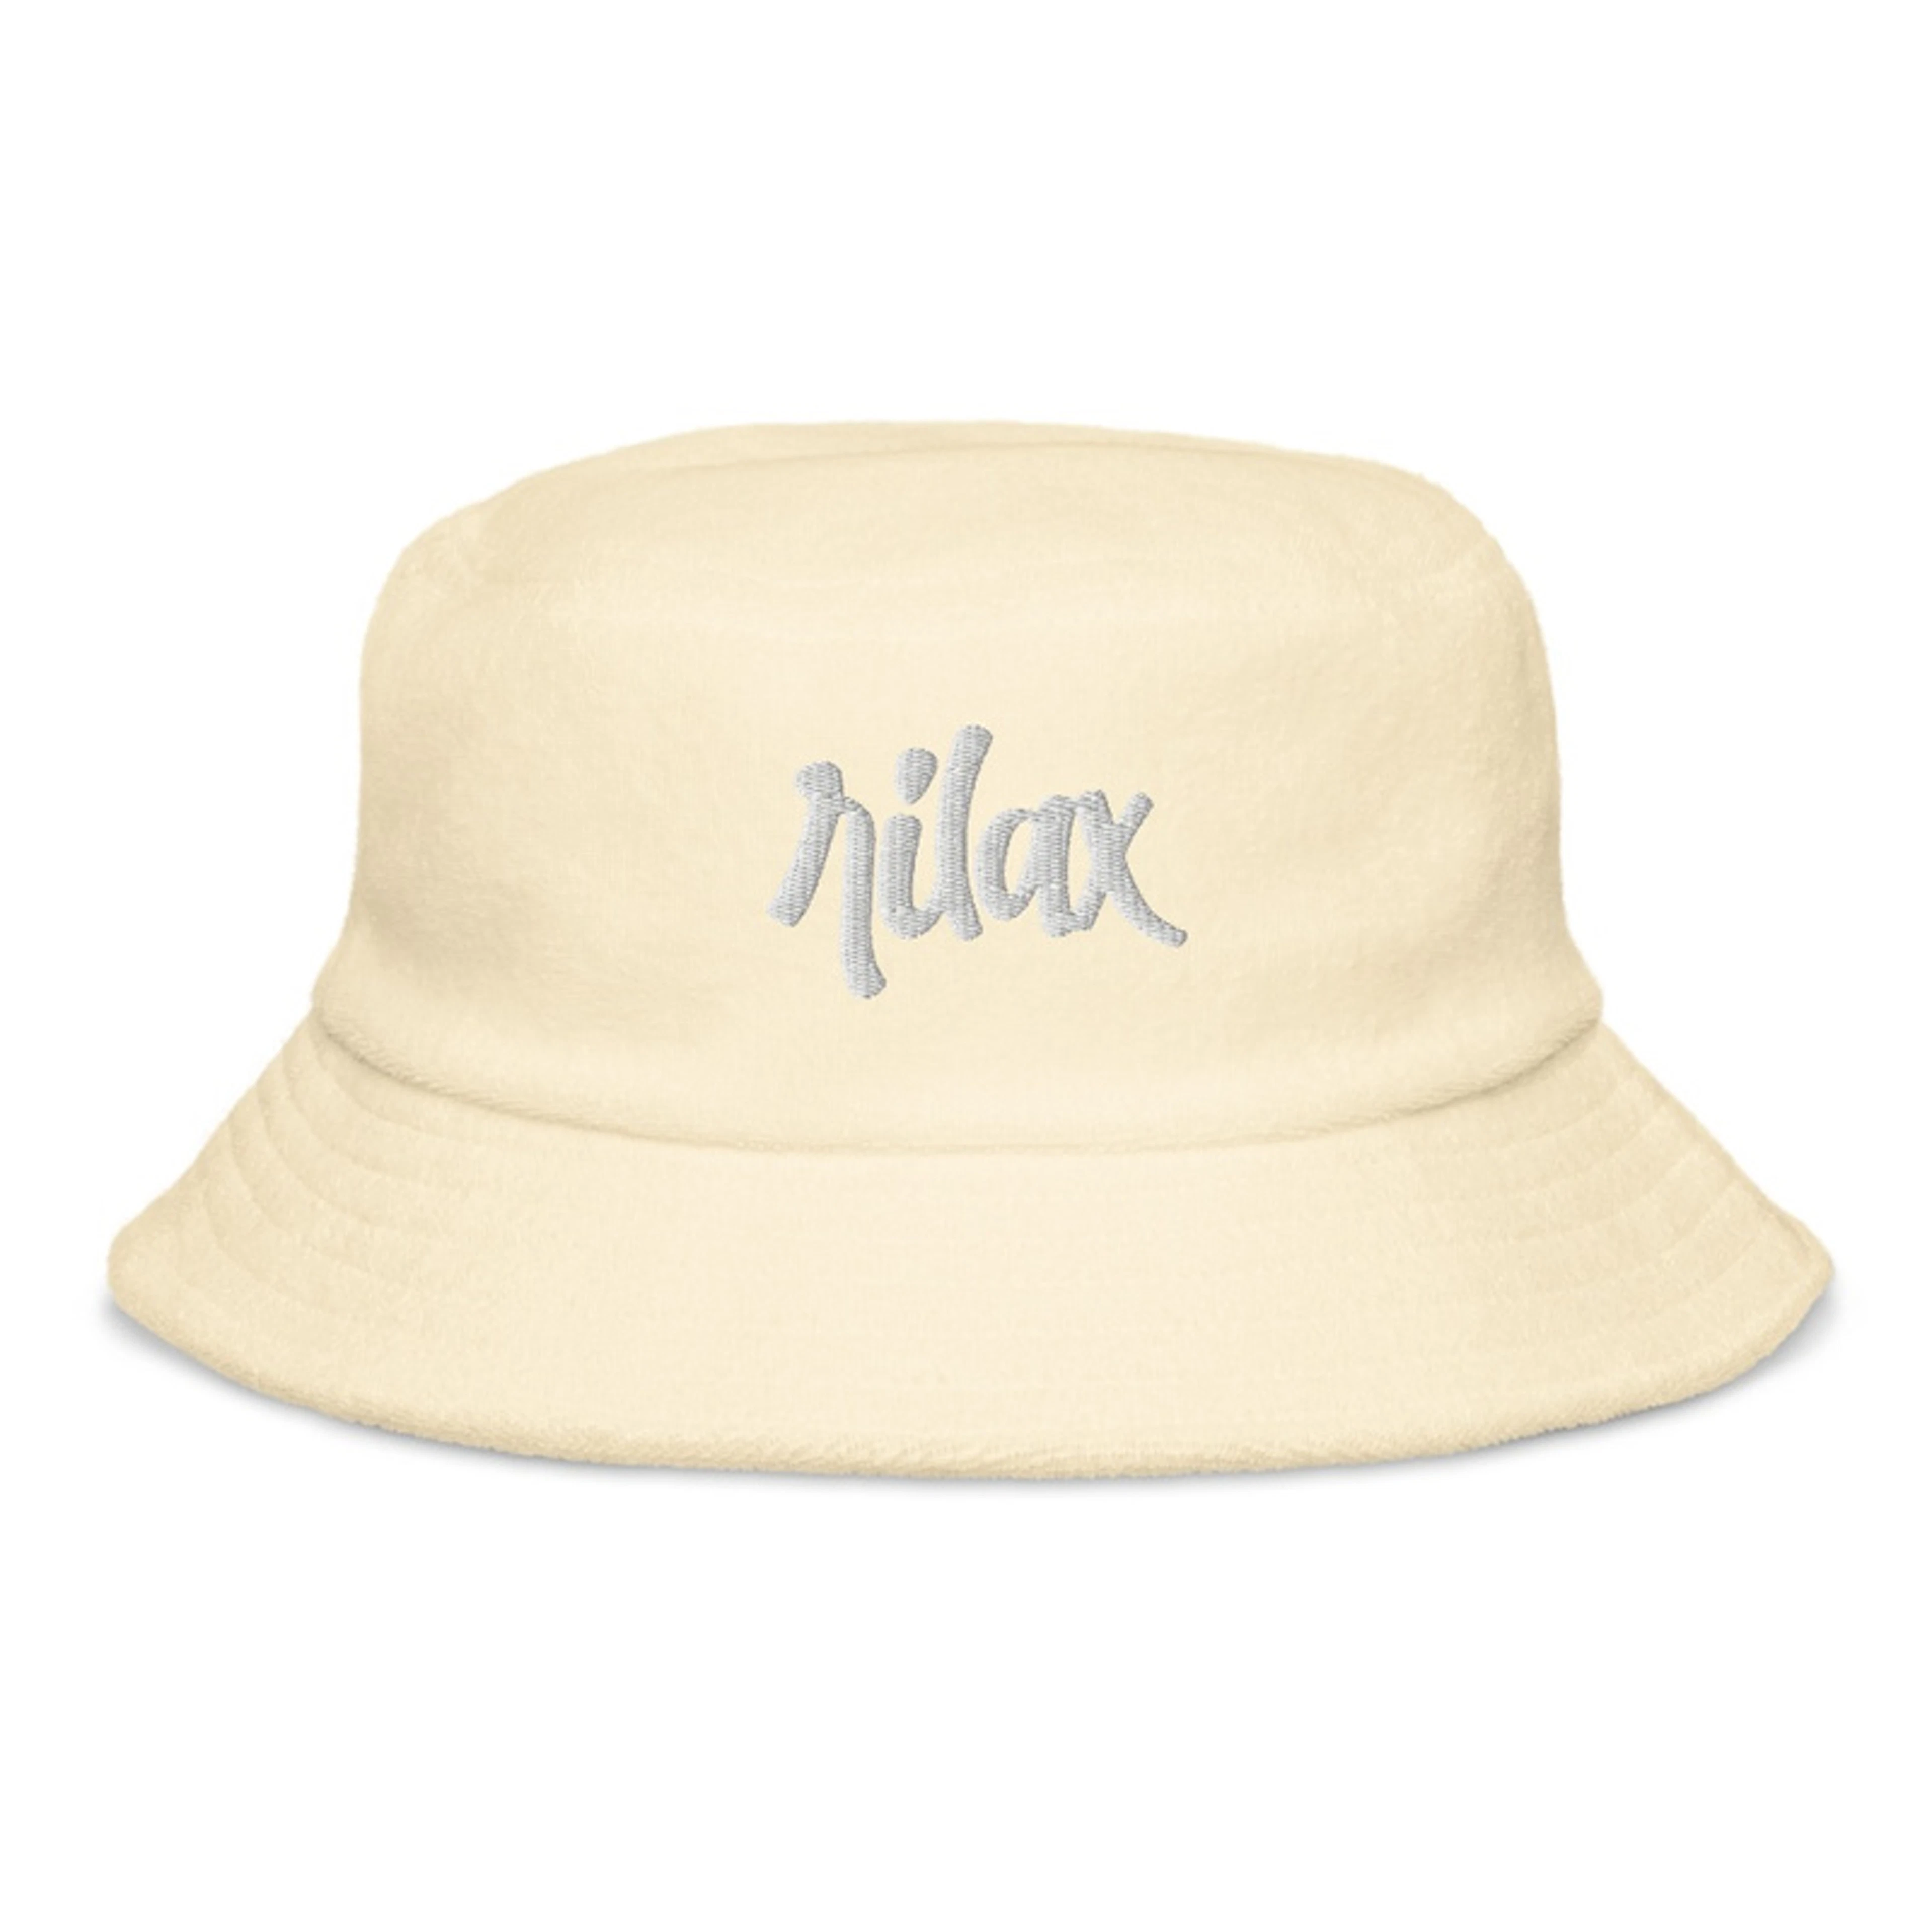 Rilax Bucket Hat